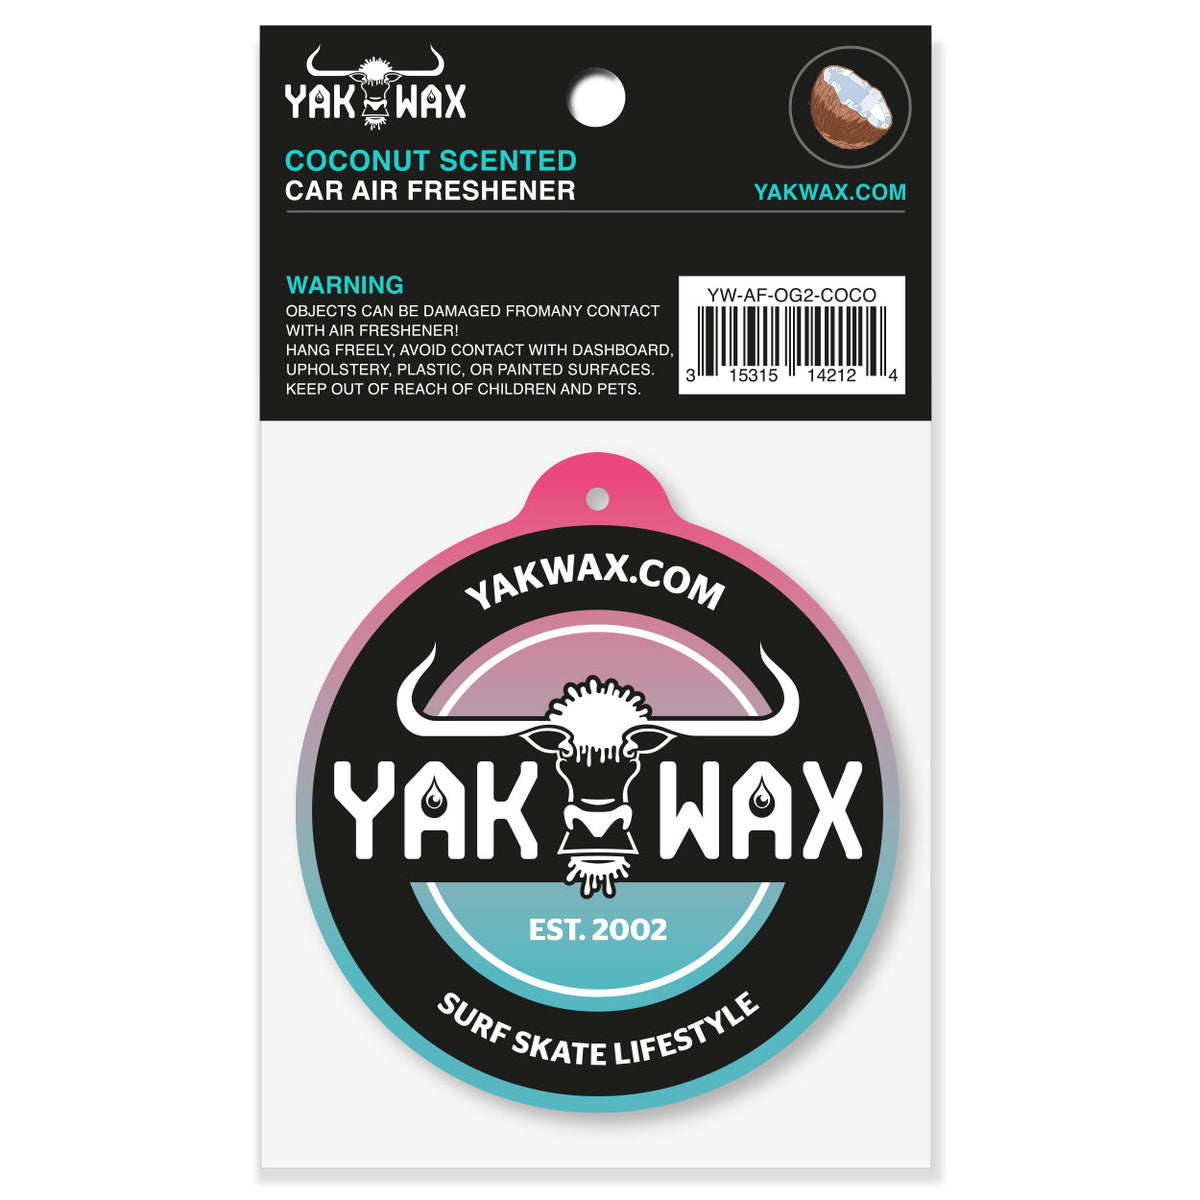 Yakwax Est. 2002 Air Freshener - Coconut Scent - Car Air Freshener by Yakwax